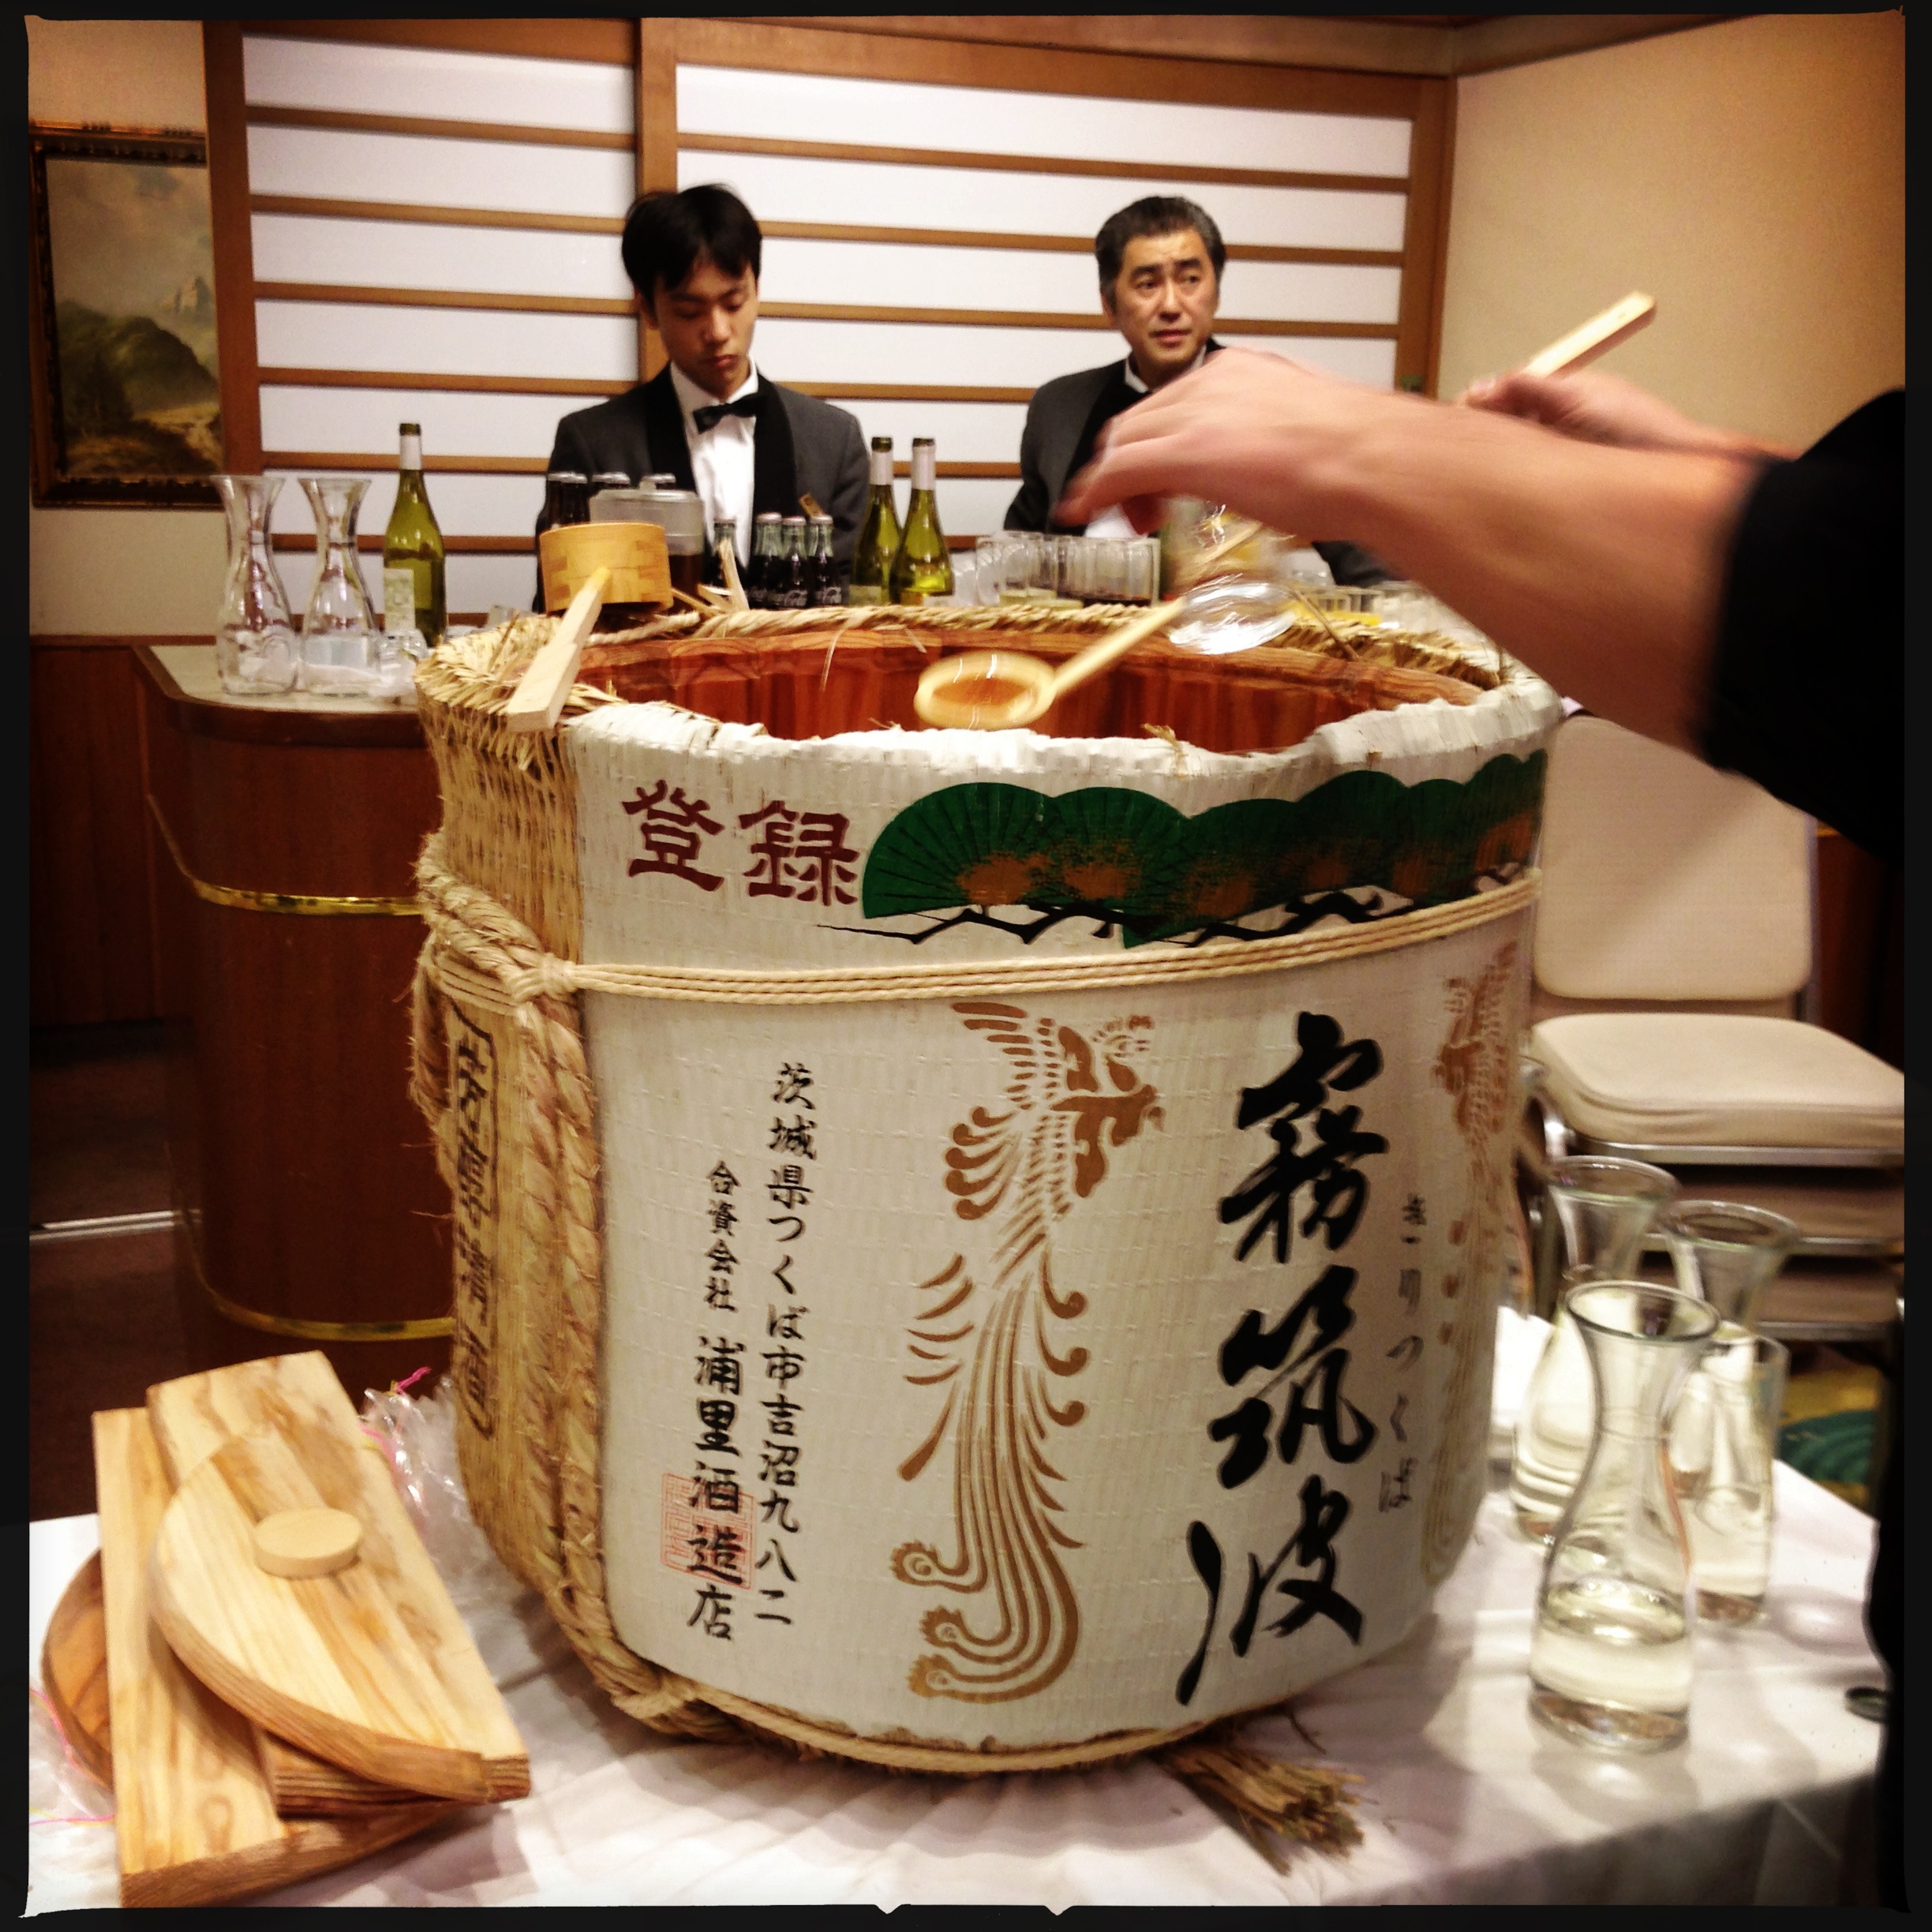 Sake bottle at ICPR'12 banquet